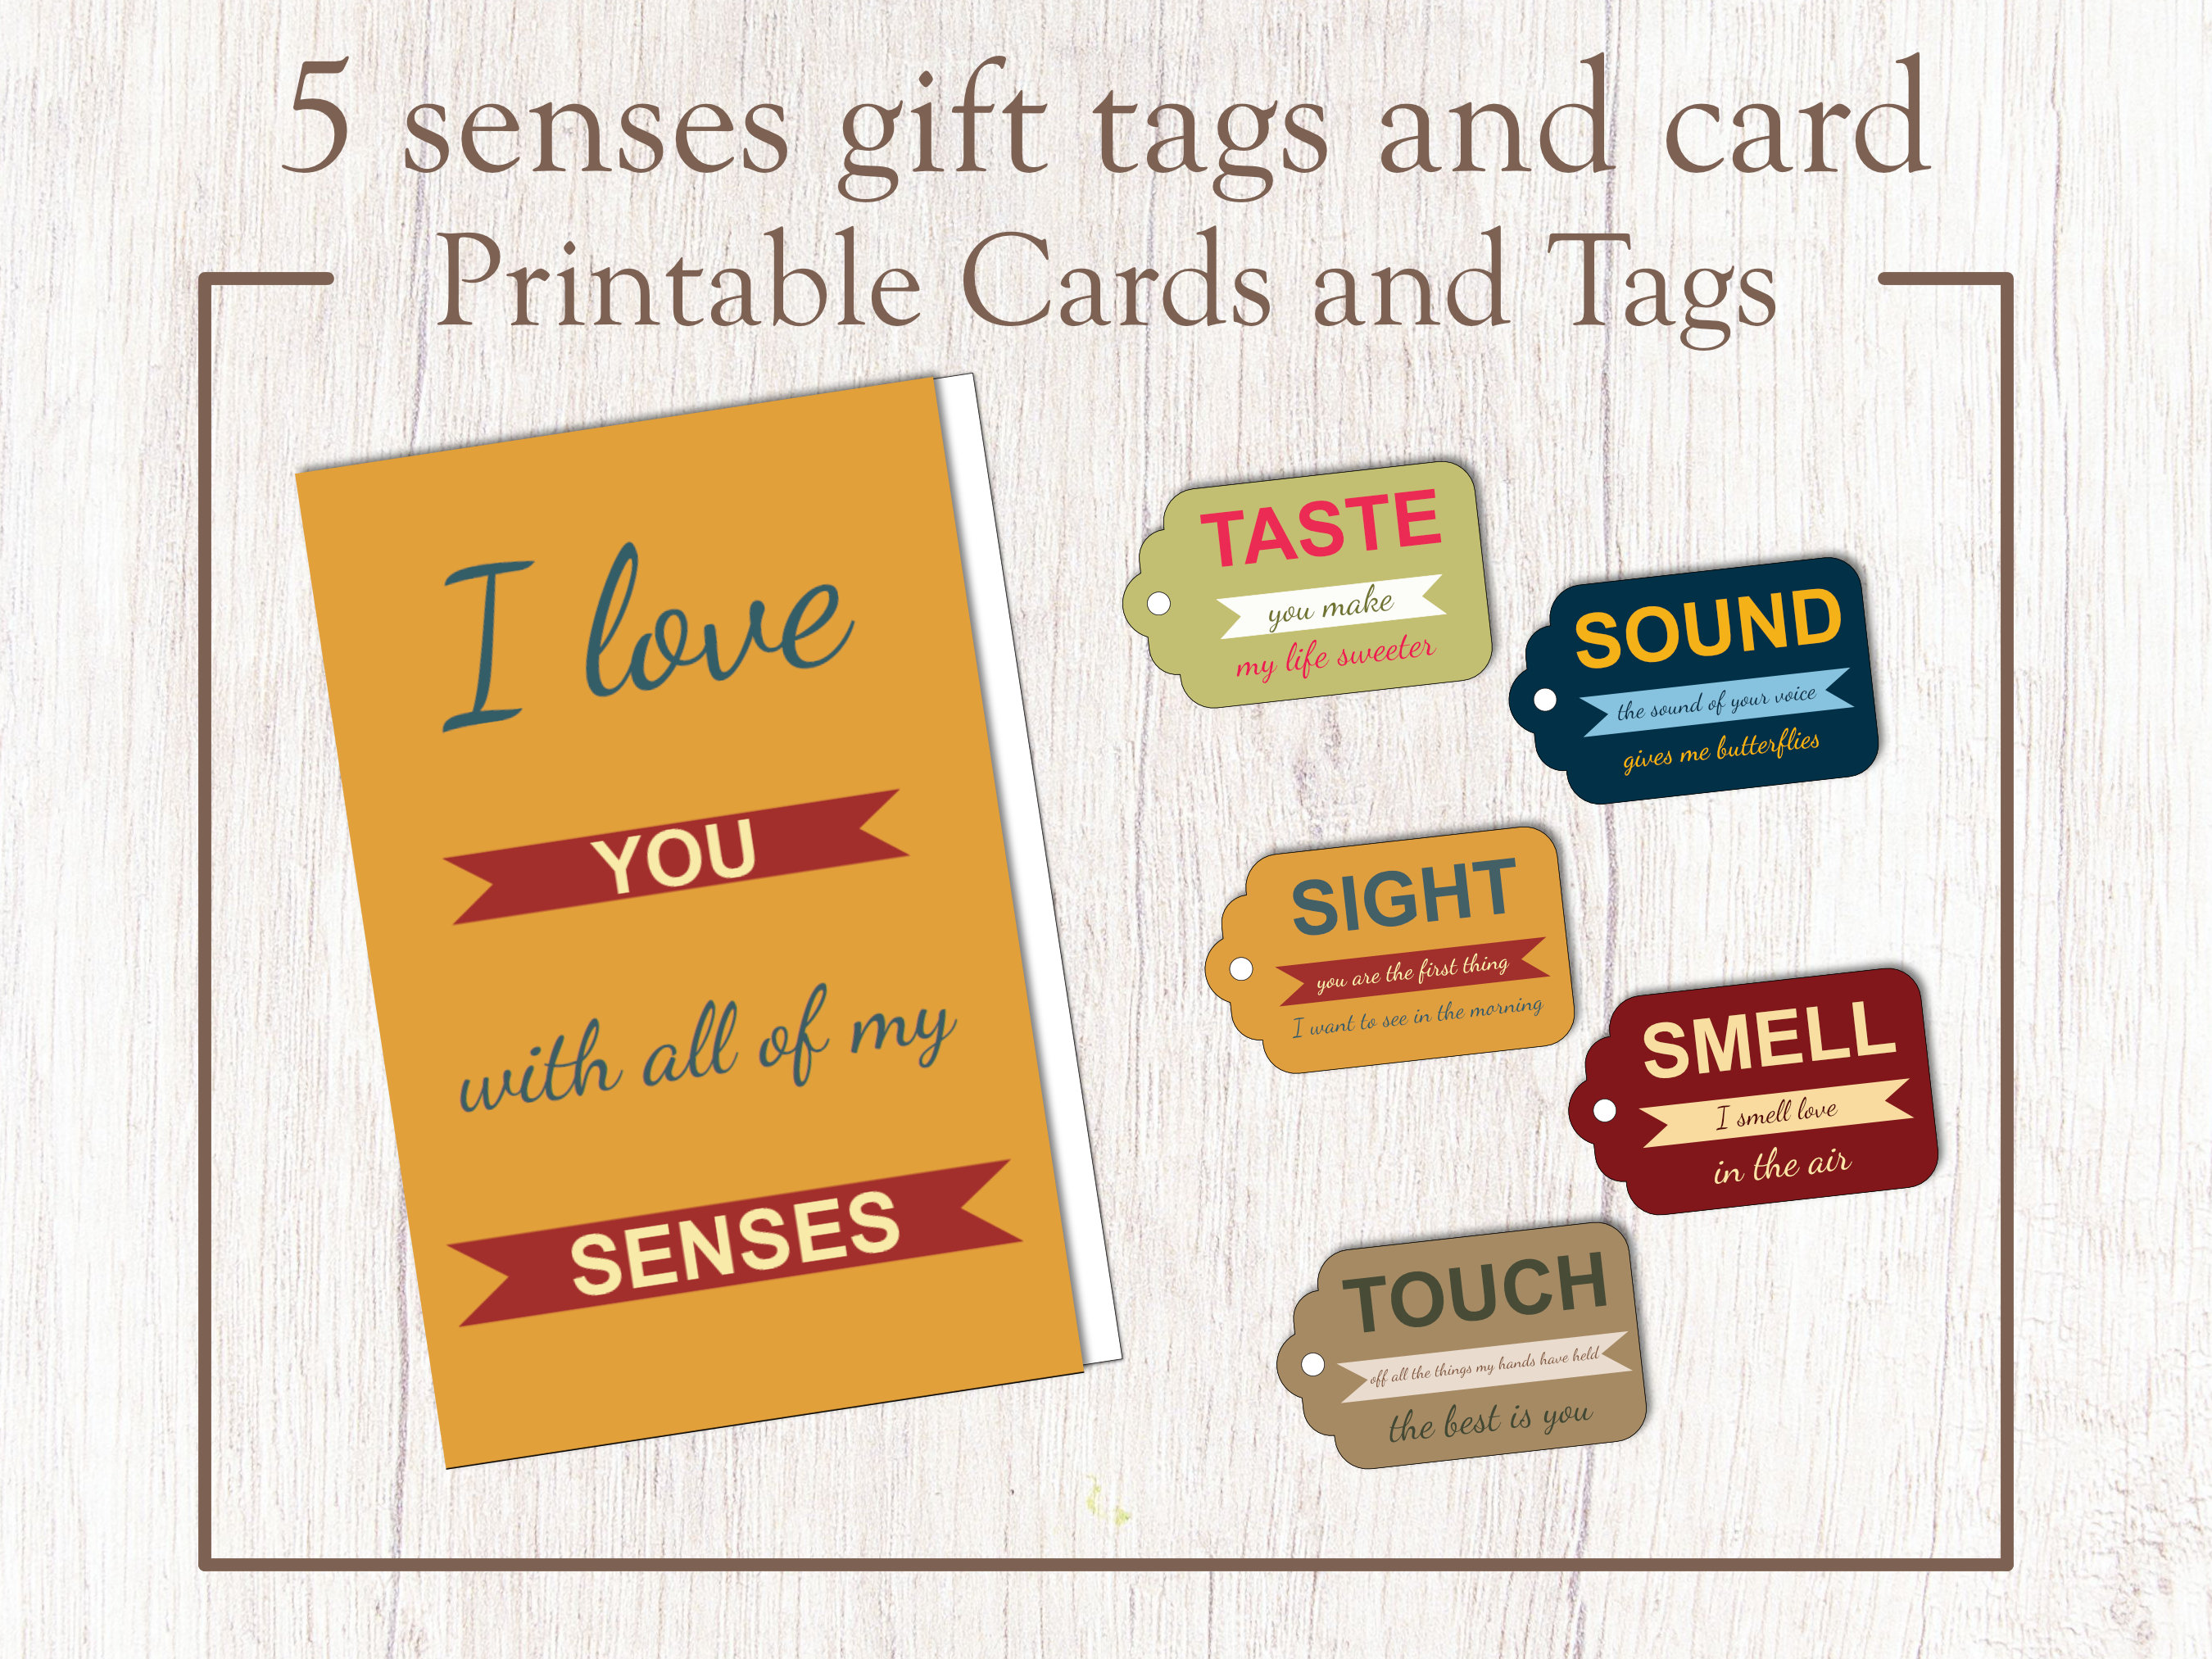 5 Senses Gift for him! Happy Valentine's Day babe♥️